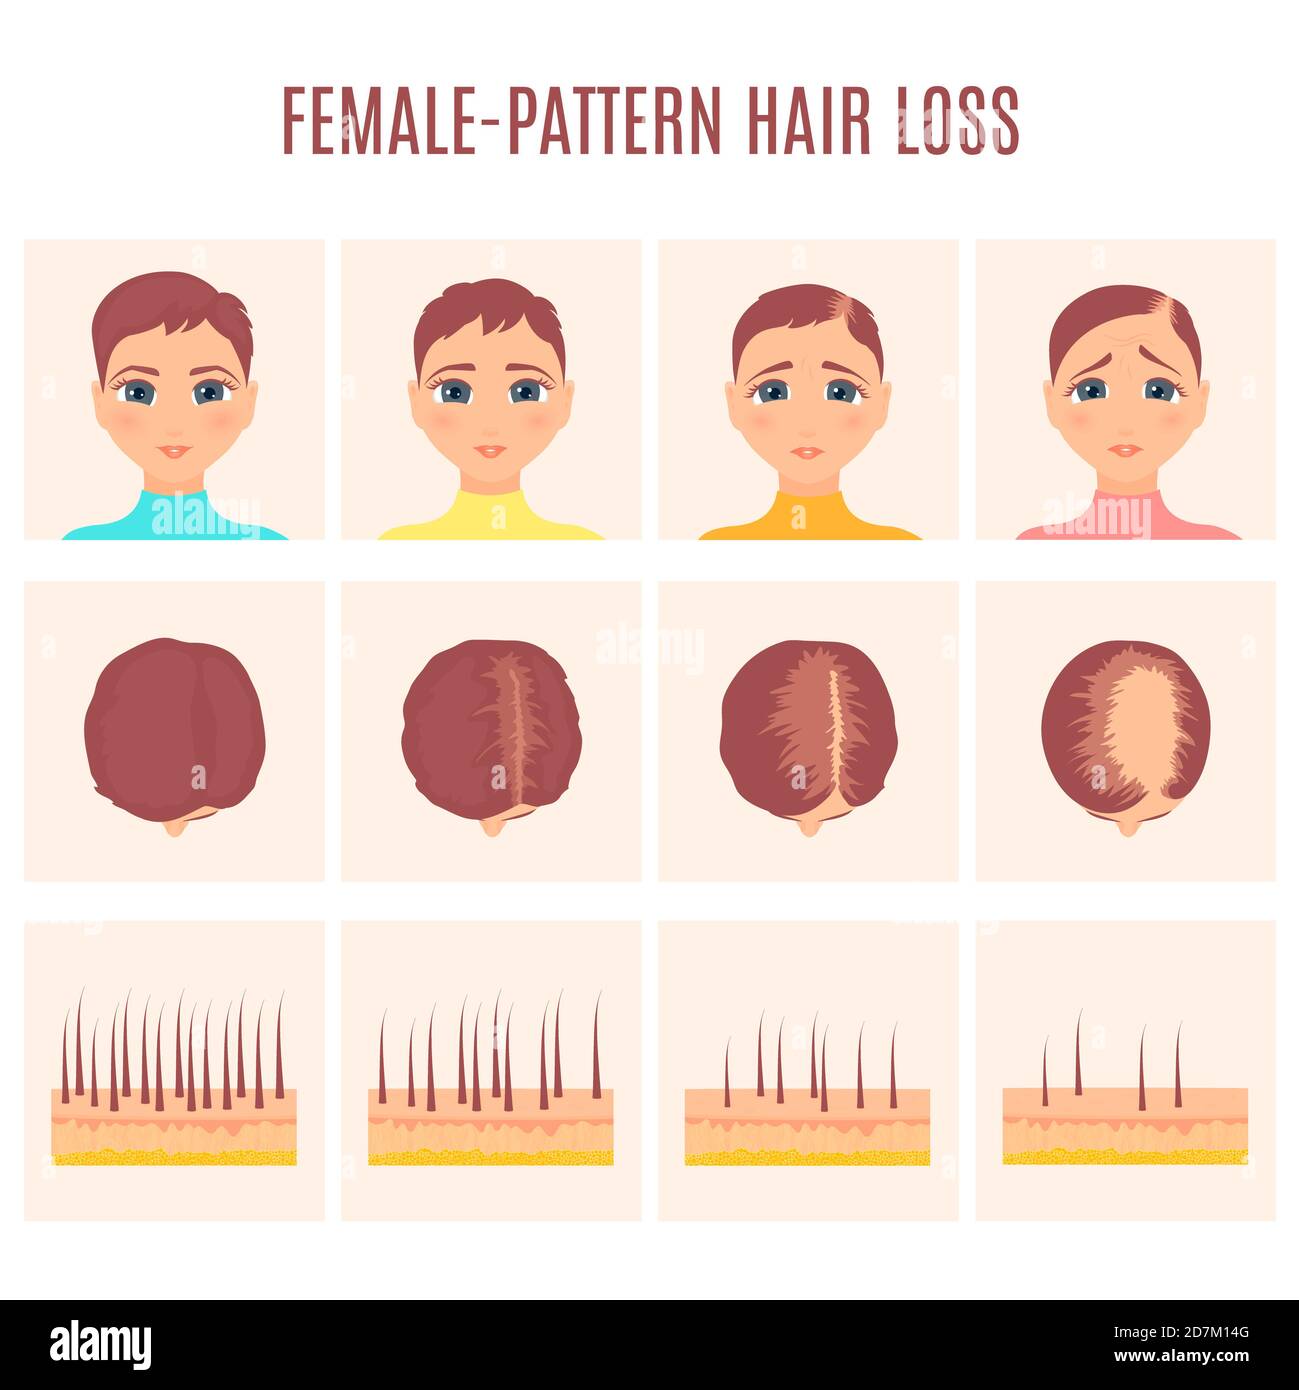 Female pattern hair loss, illustration. Stock Photo